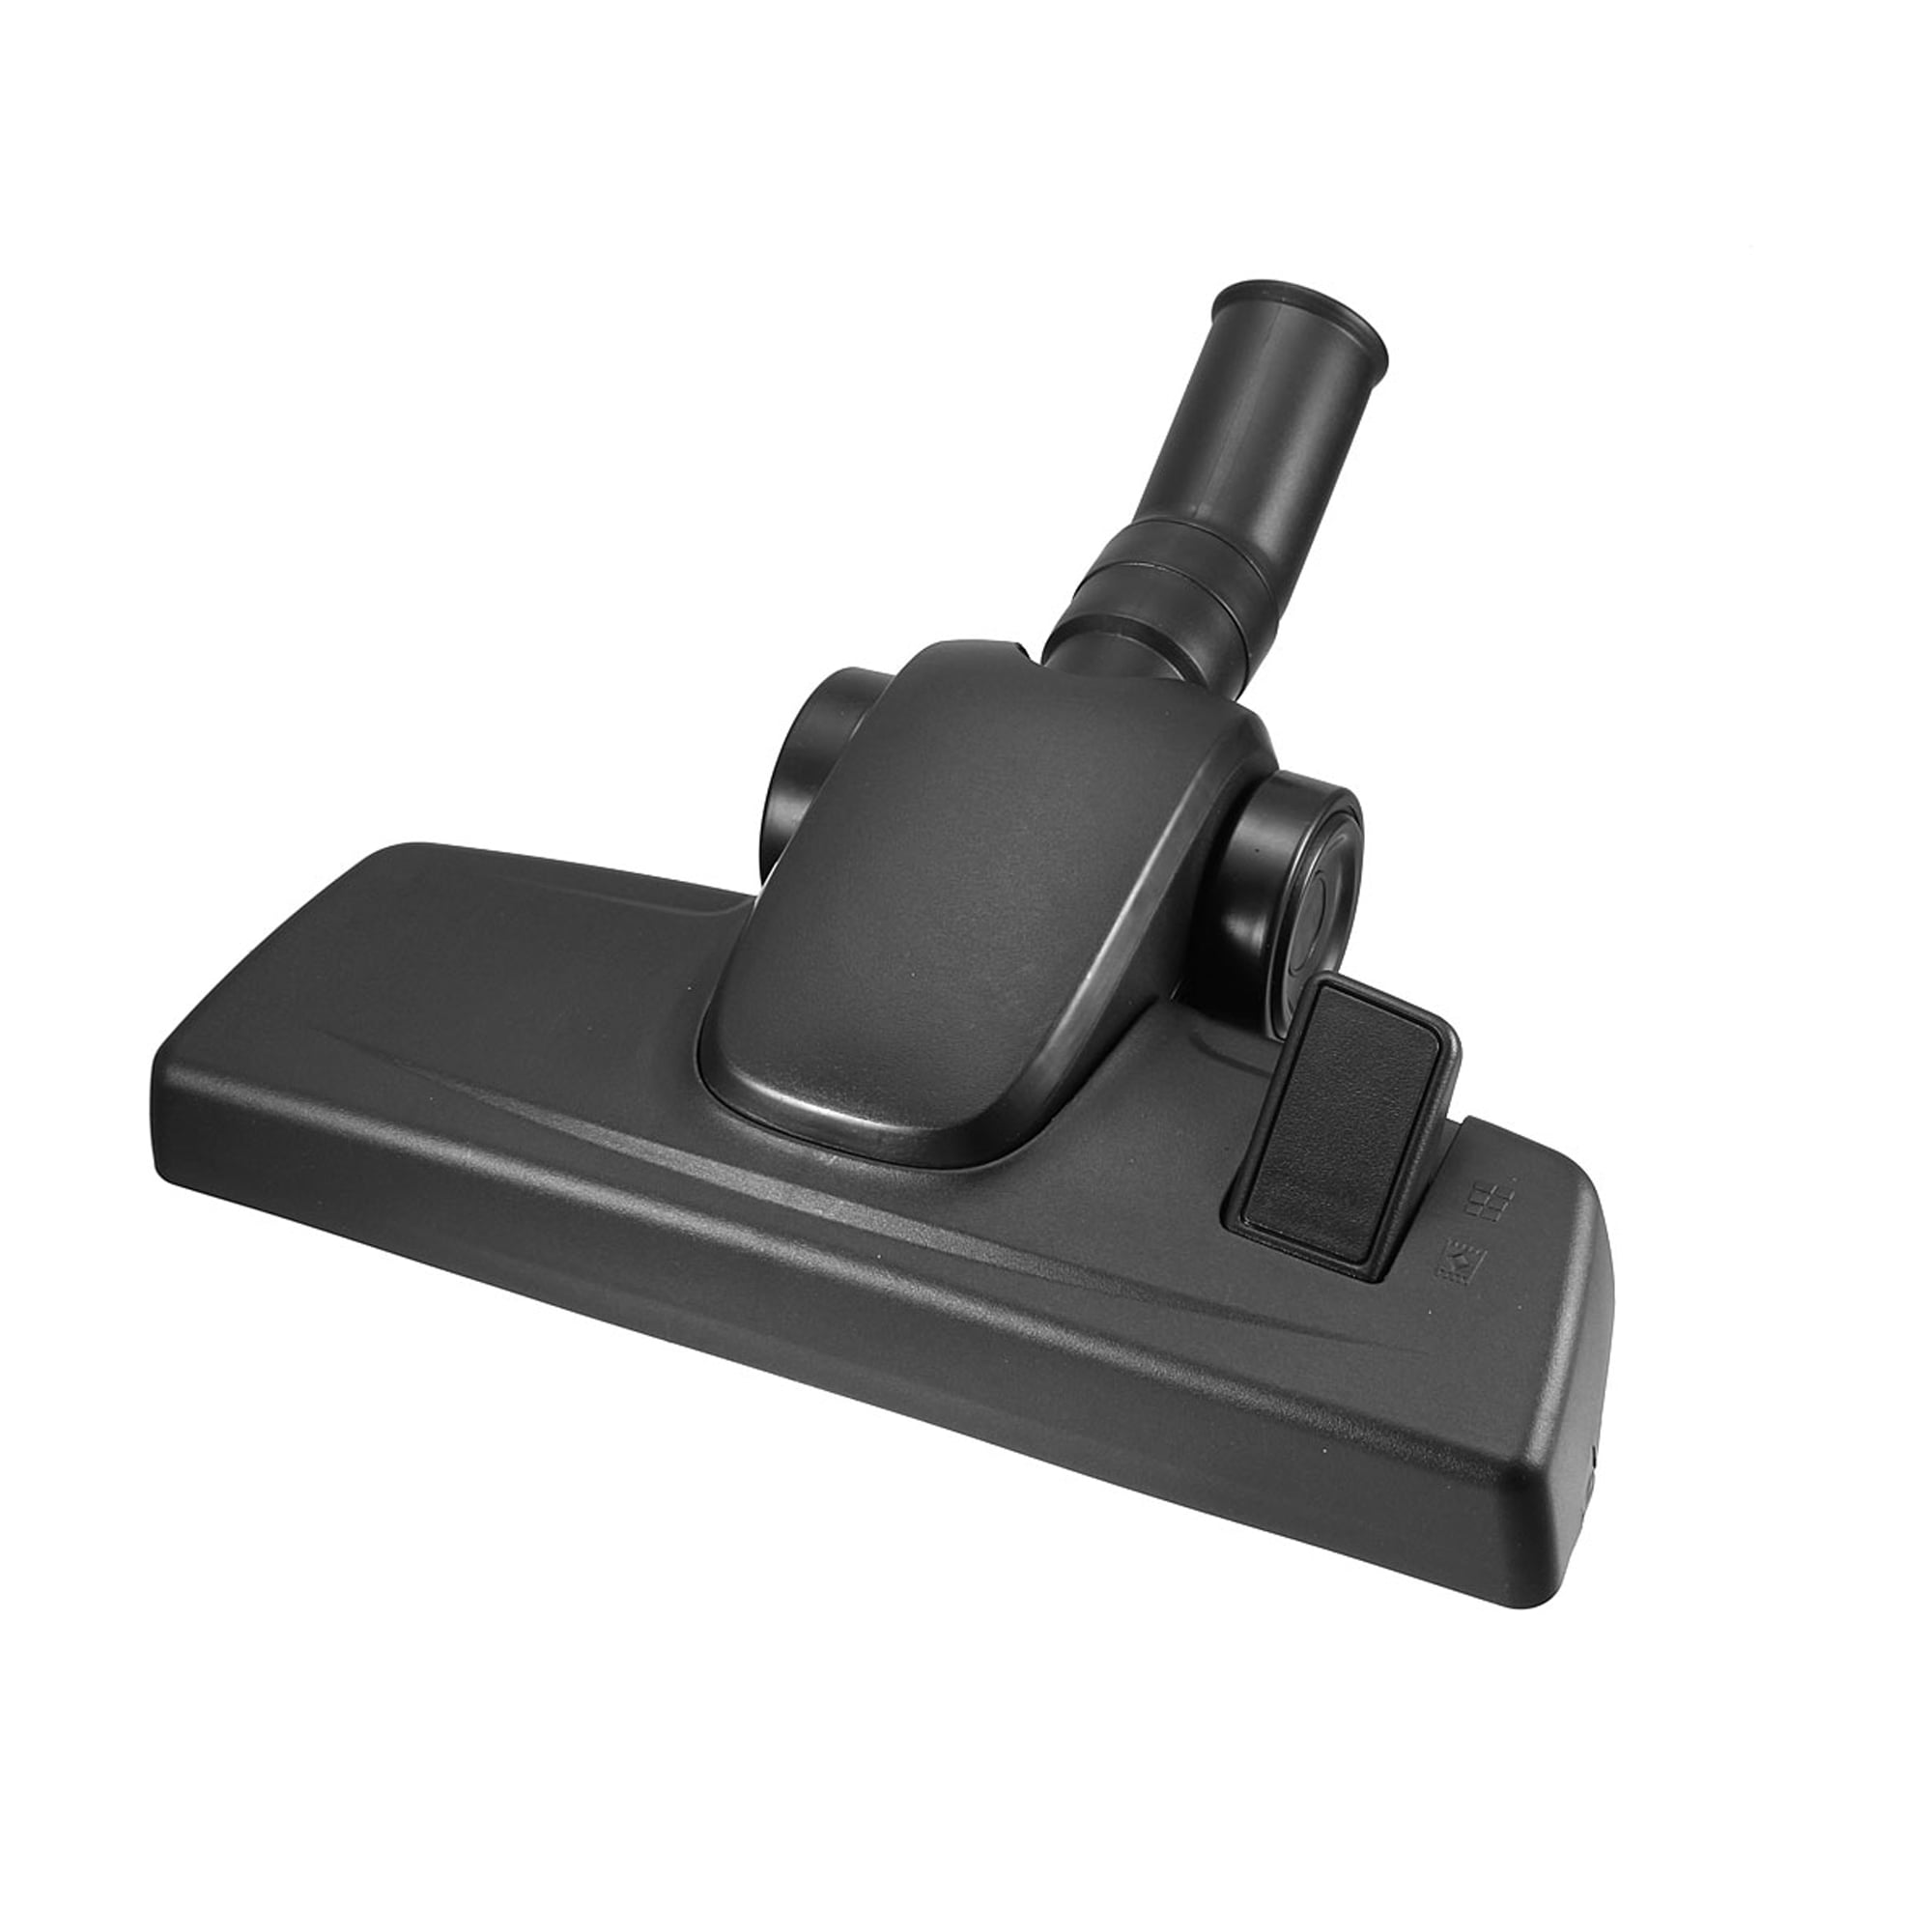 32mm Universal Vacuum Cleaner Carpet Floor Nozzle Brush Attachments Head E6Y4 